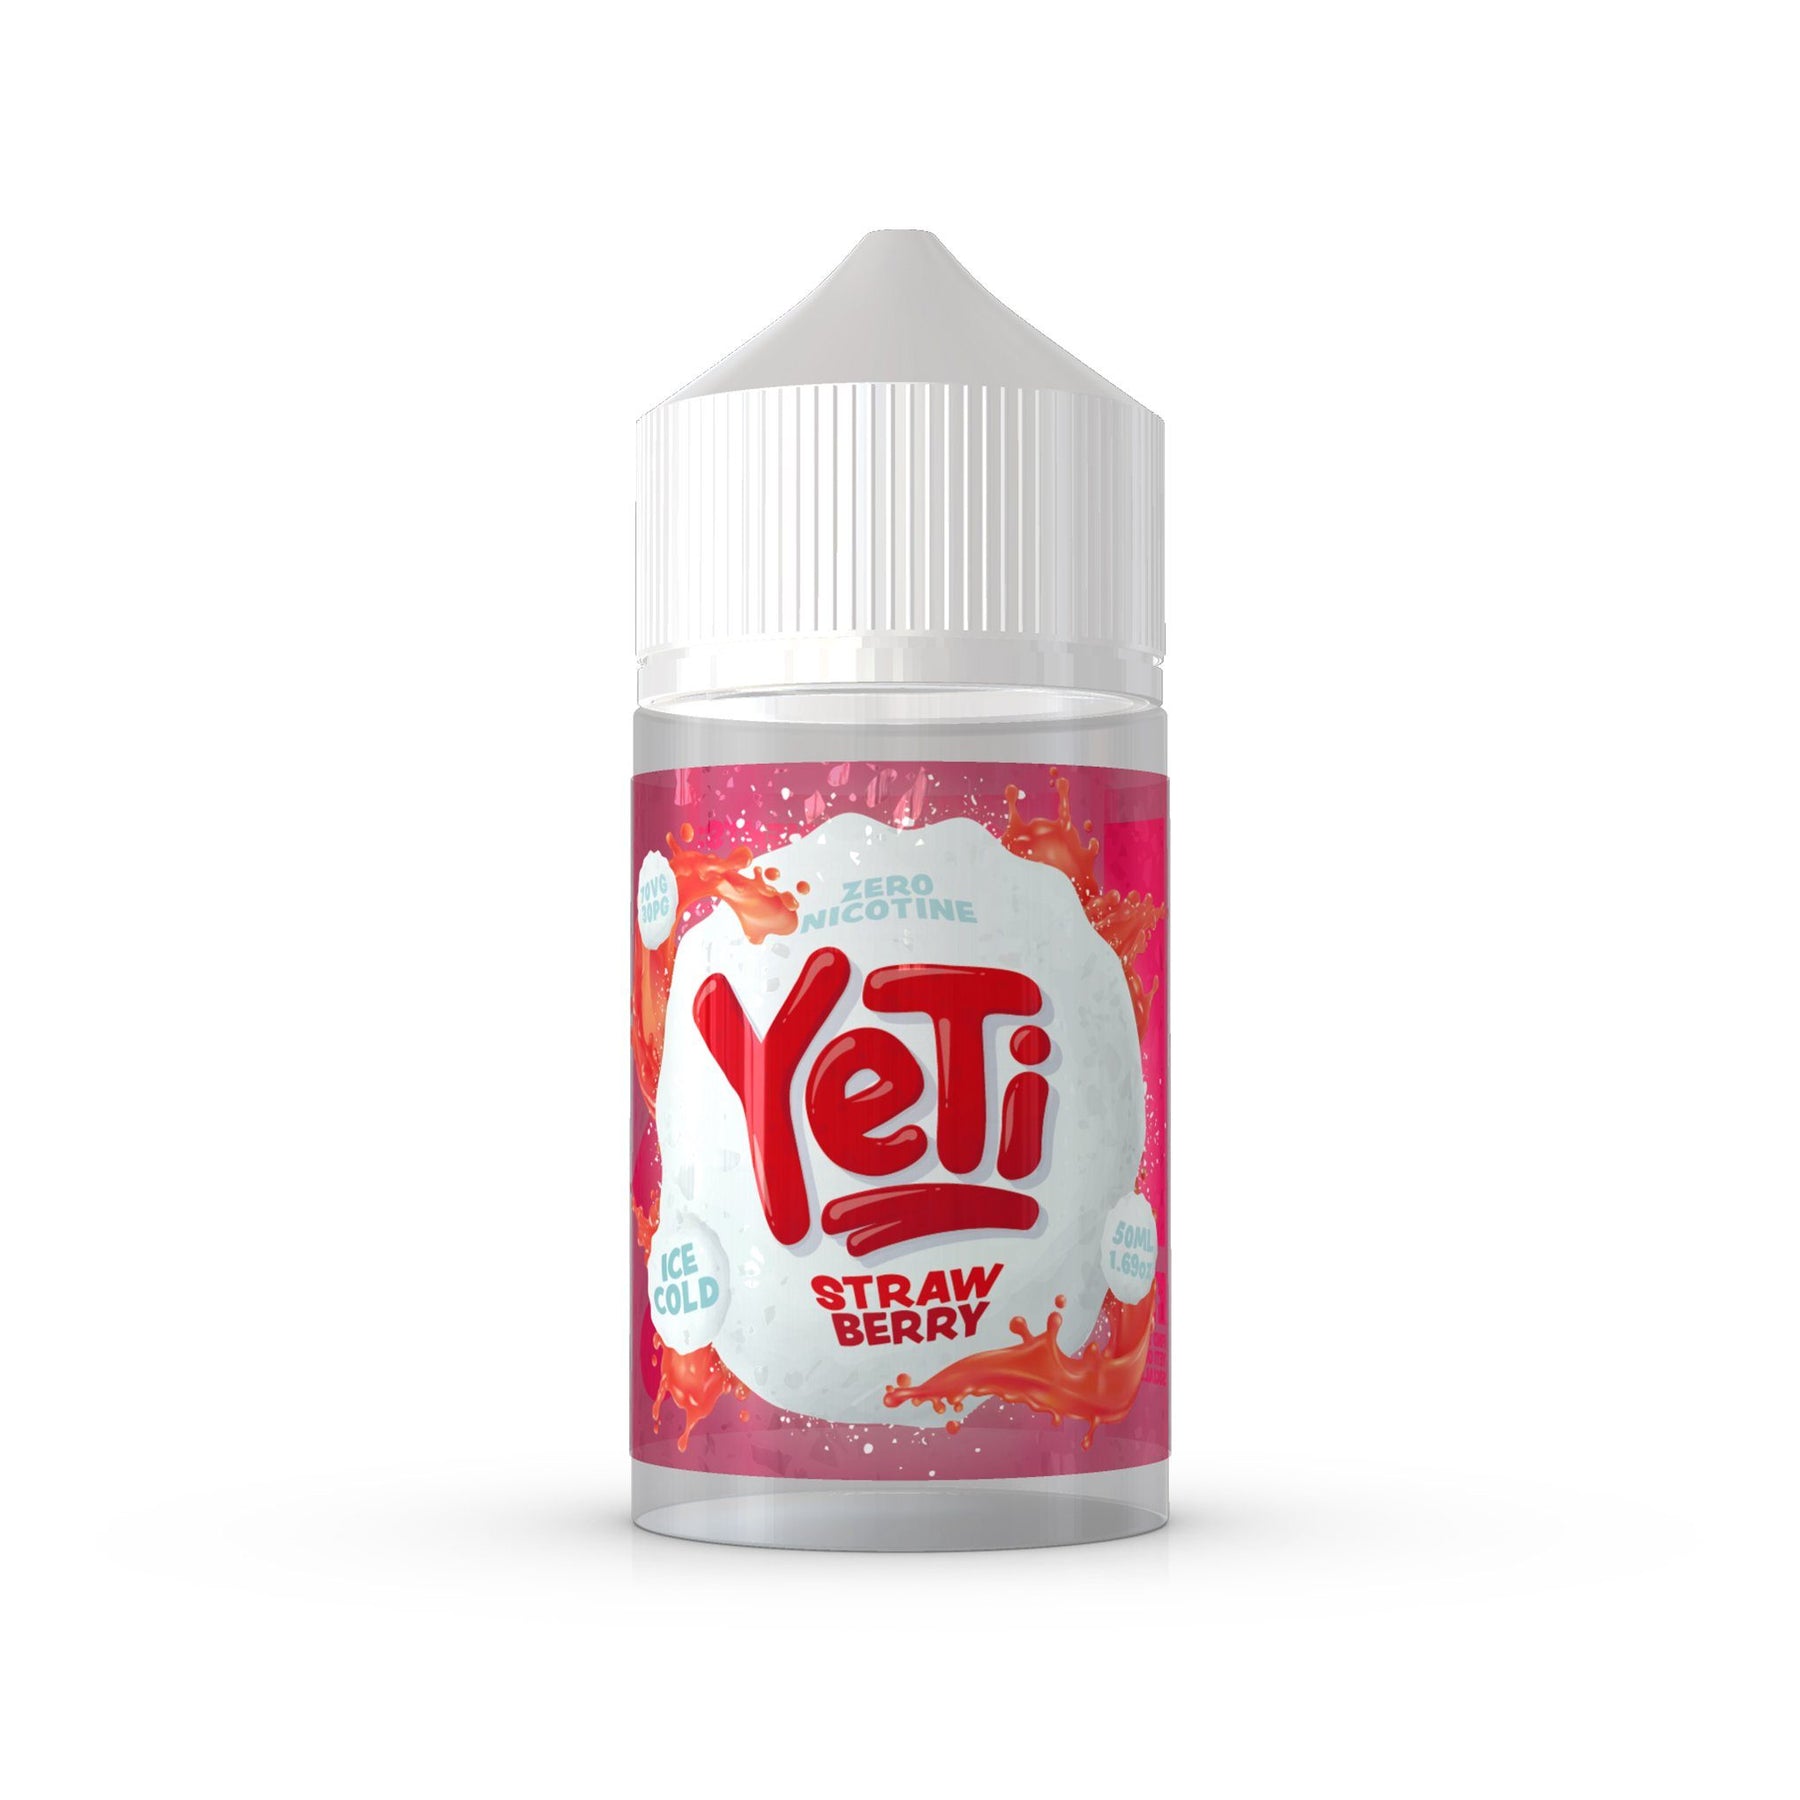 Yeti 50ml Short Fill E-Liquid Strawberry Ice